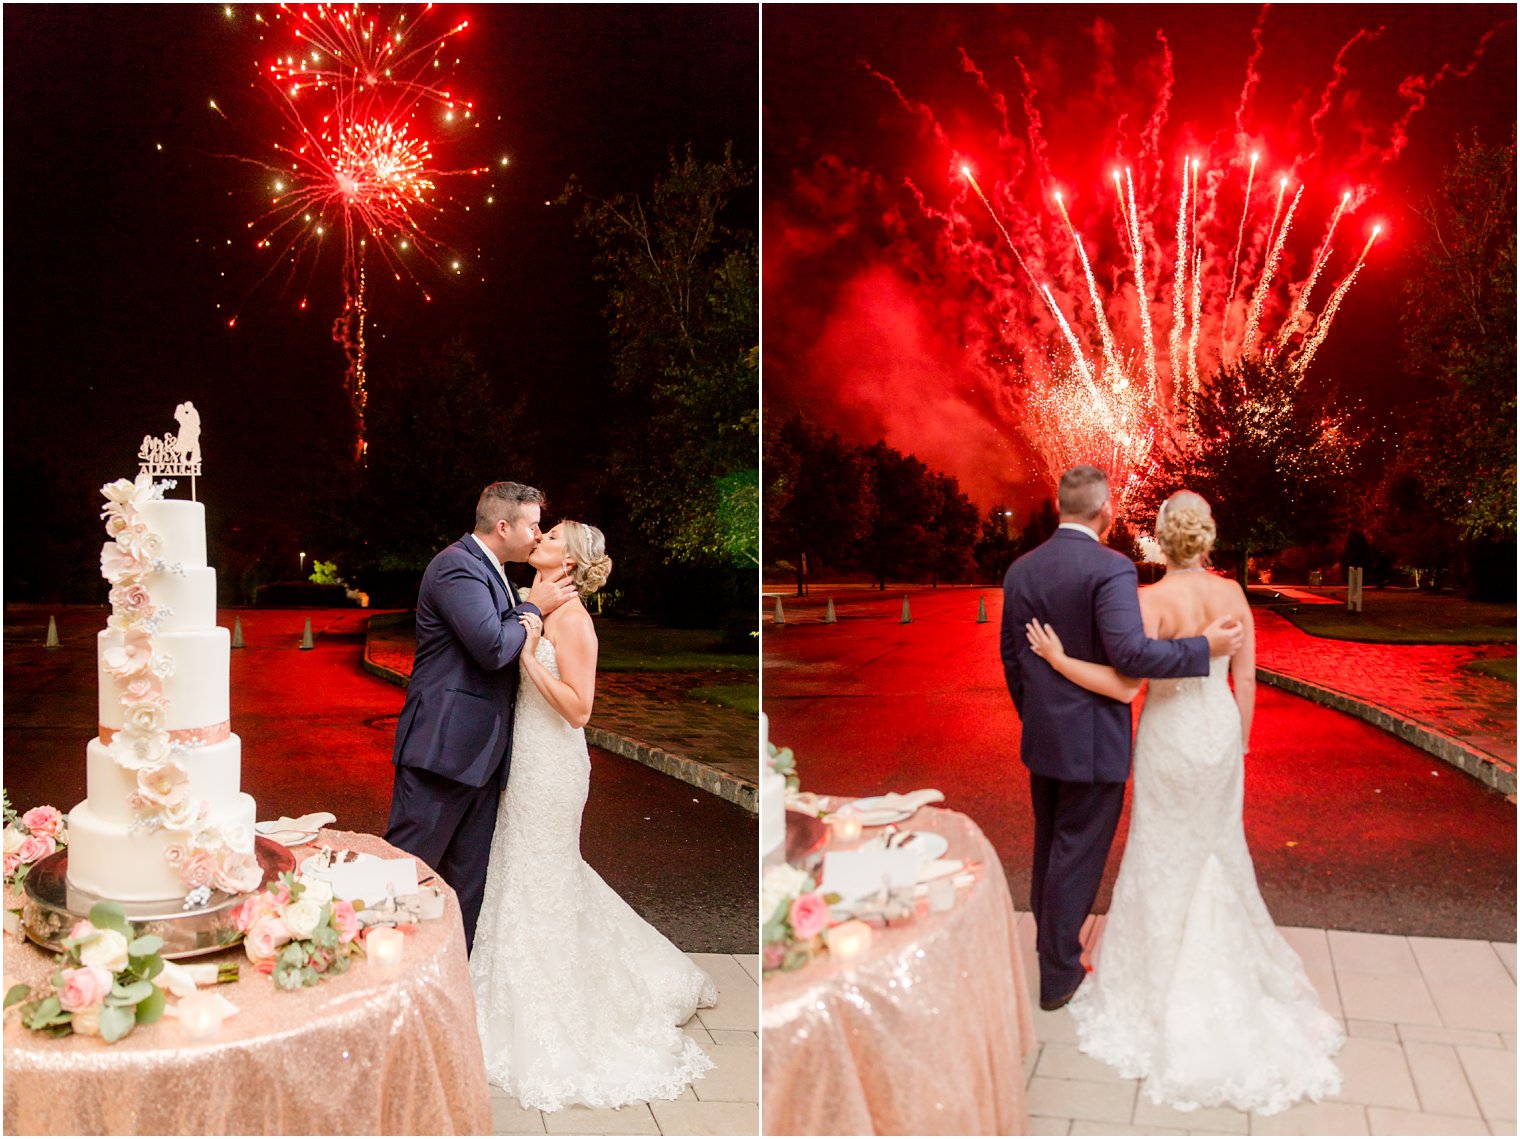 red firework display at wedding reception at the Palace at Somerset Park